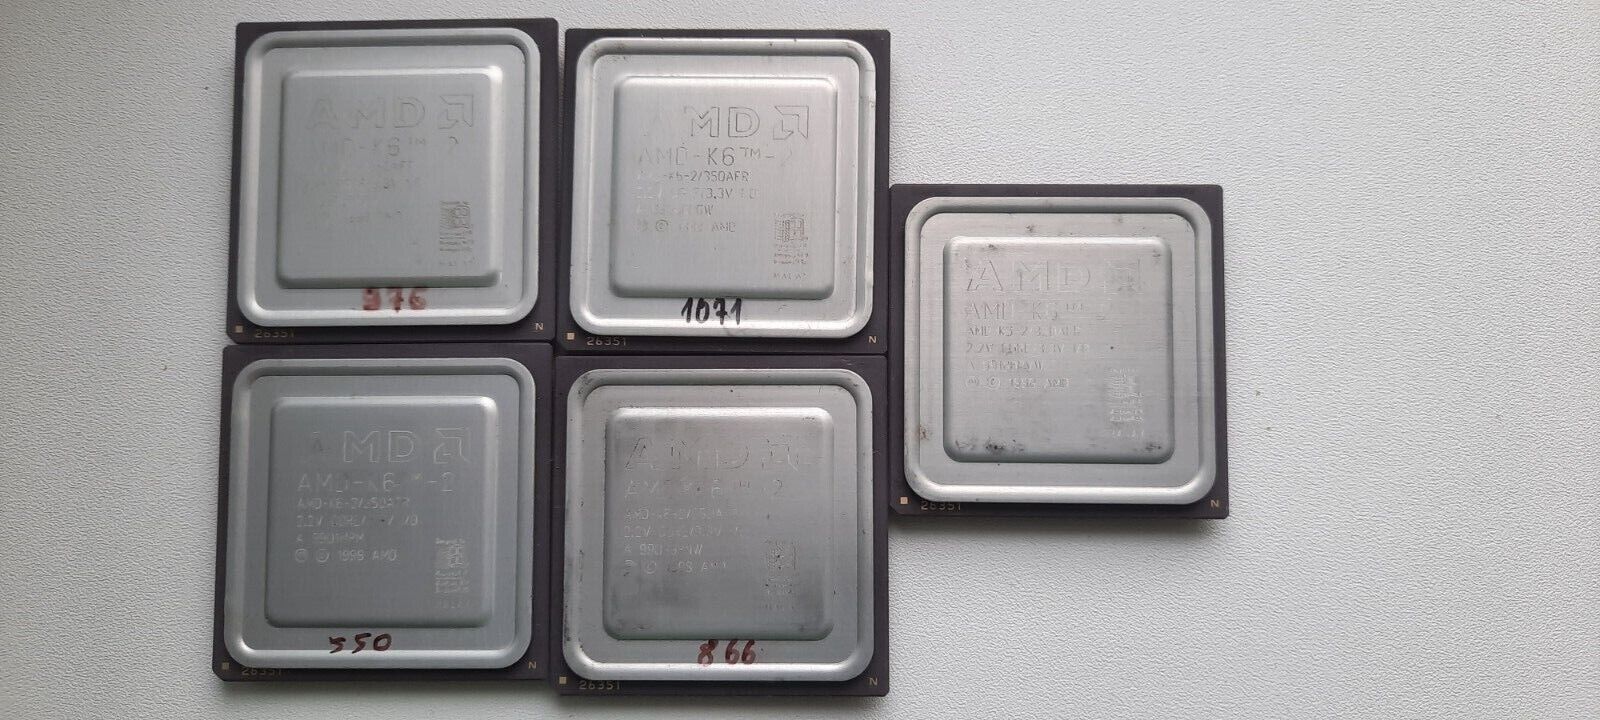 AMD K6-2 266 300 333 350 400 450 475 500 550 classic AMD K6-2 Vintage CPU, GOLD